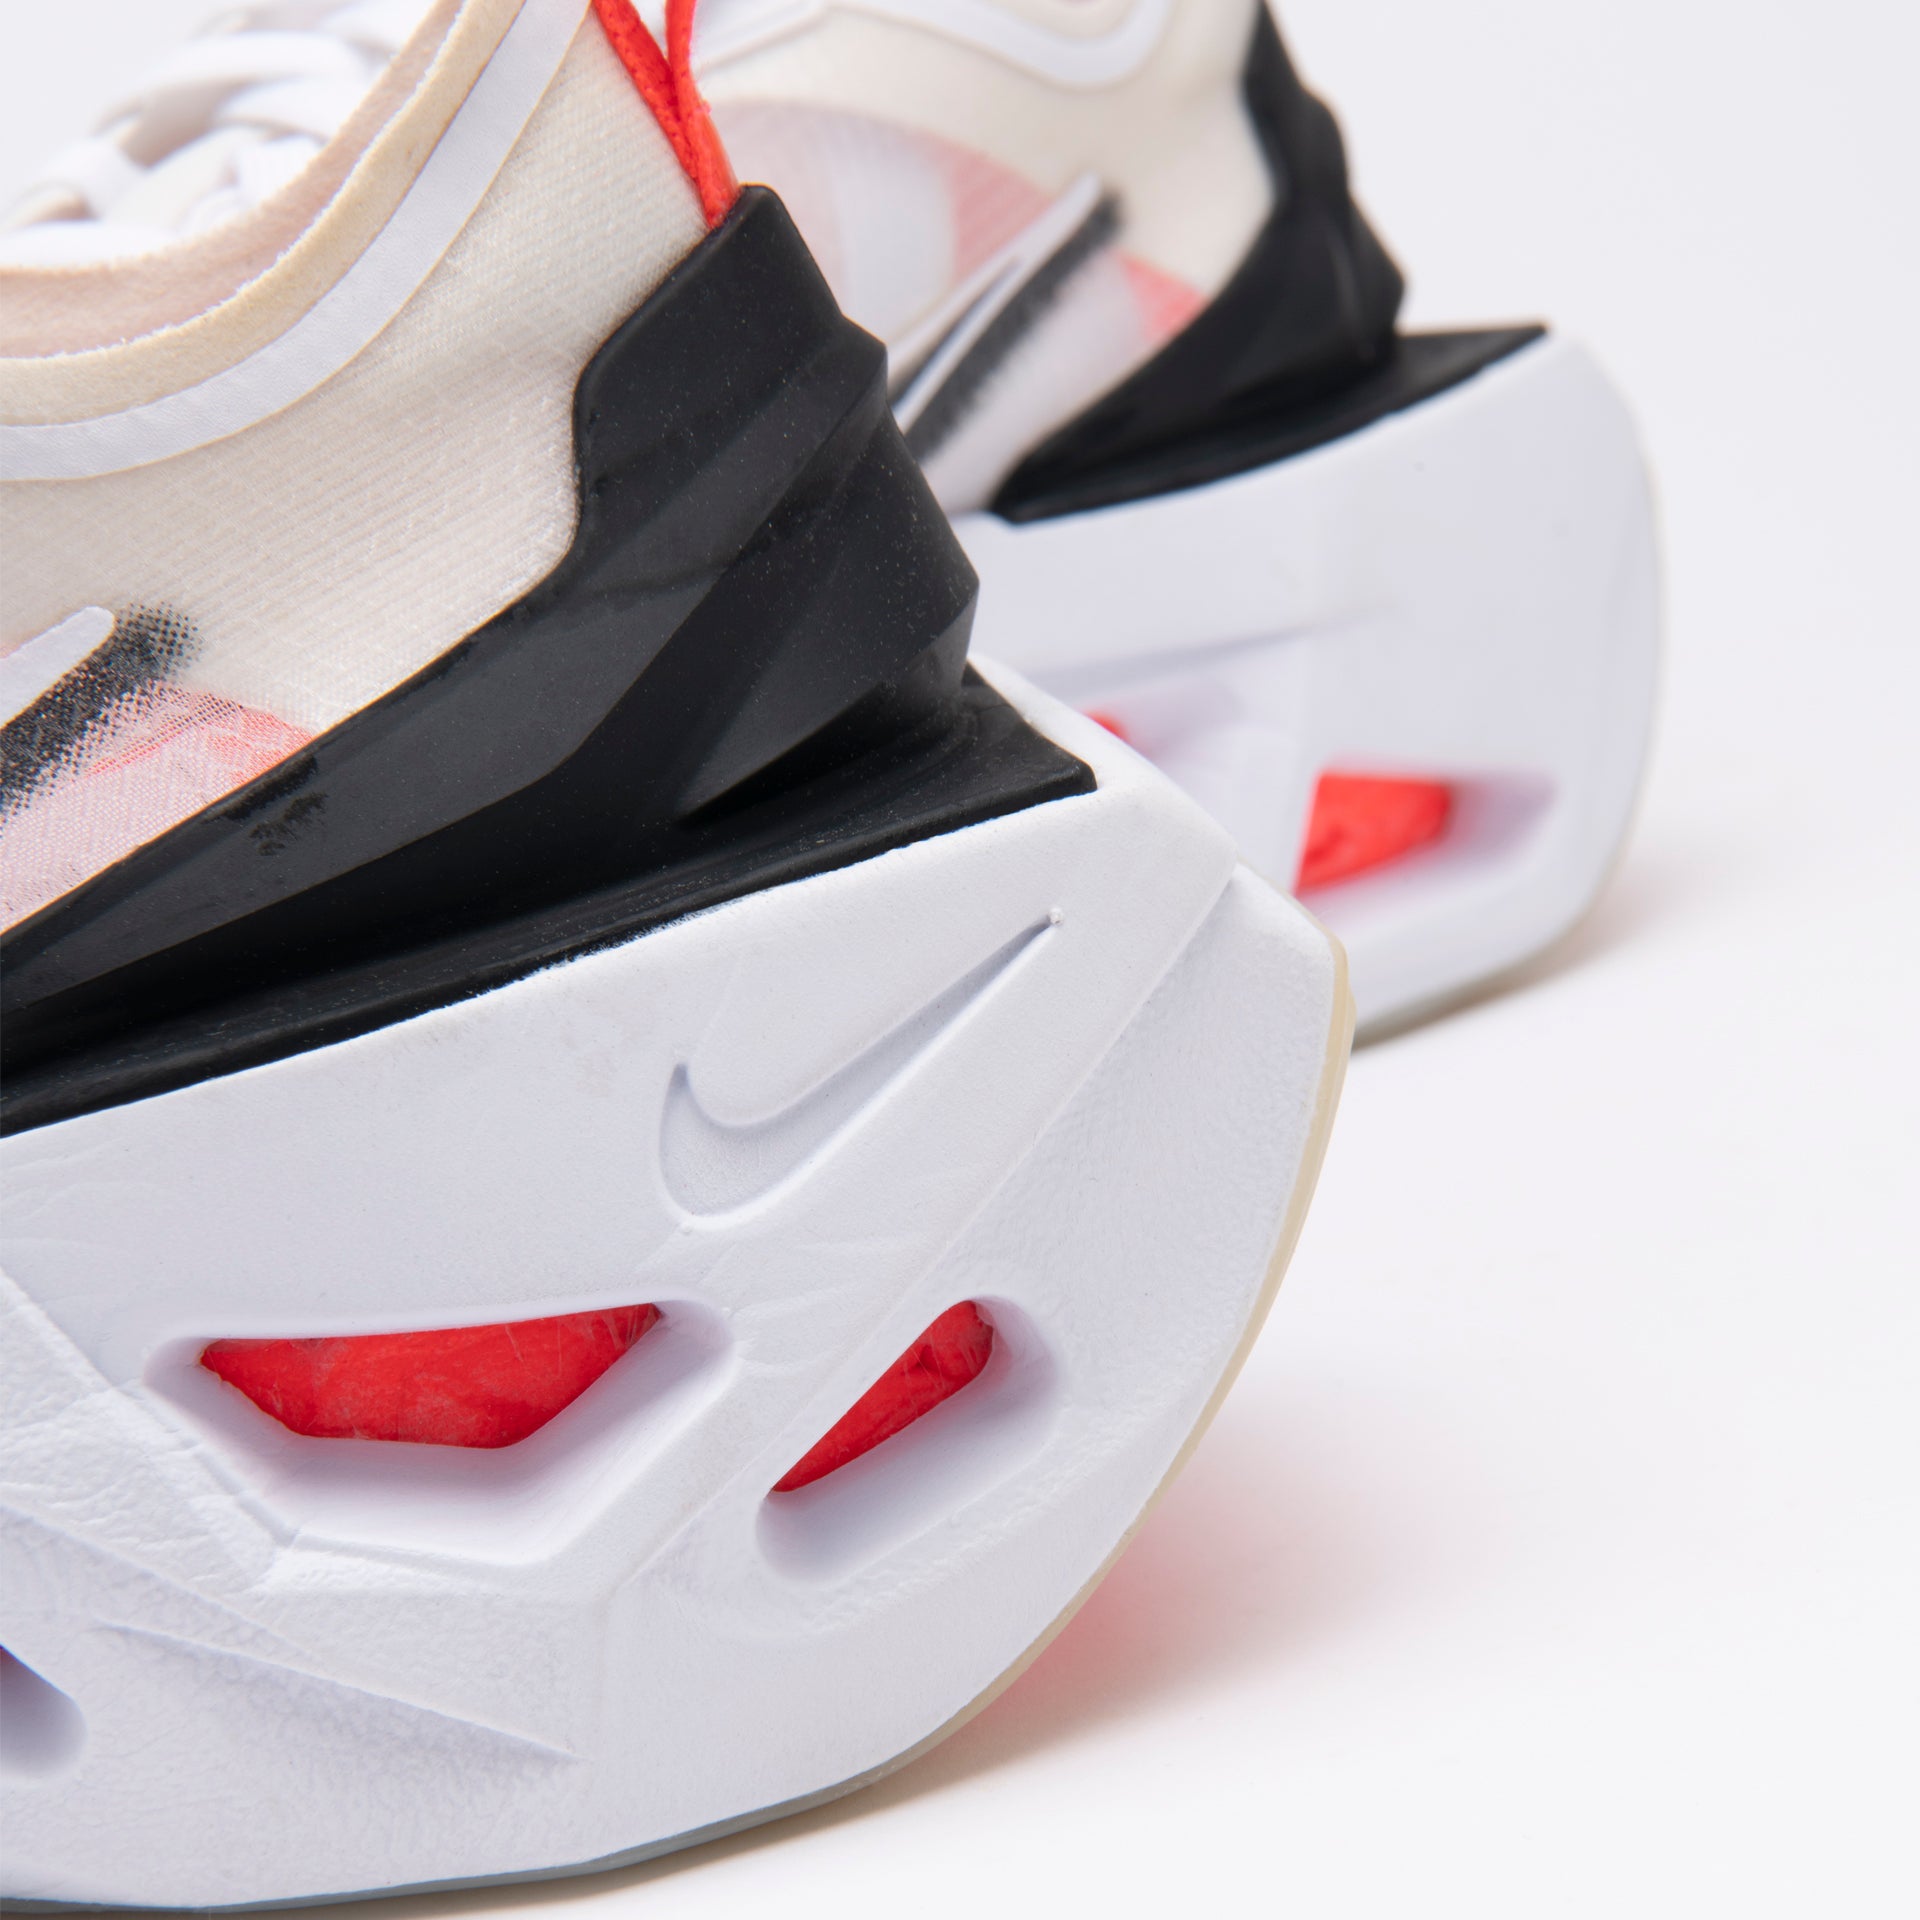 Zoom X Vista Grind Sneakers From Nike